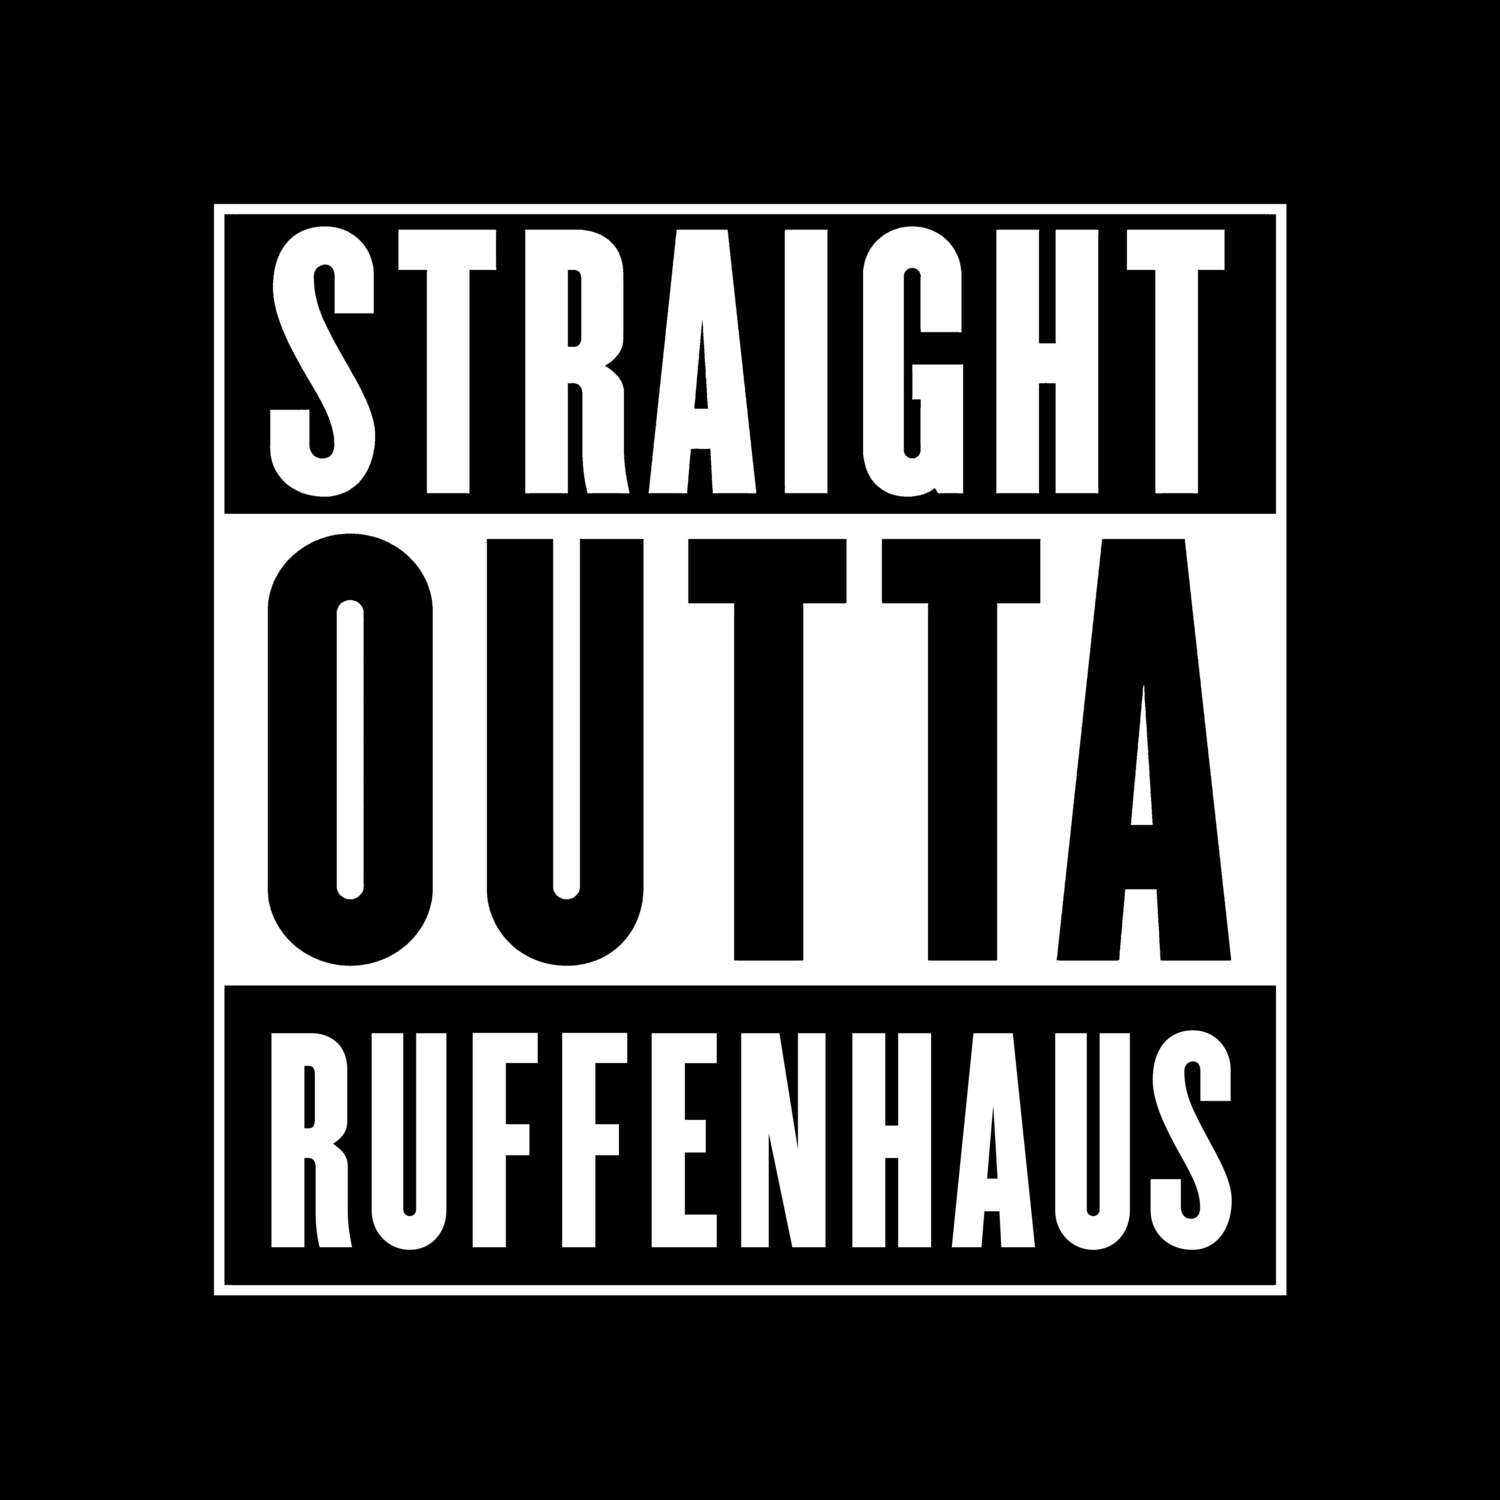 Ruffenhaus T-Shirt »Straight Outta«